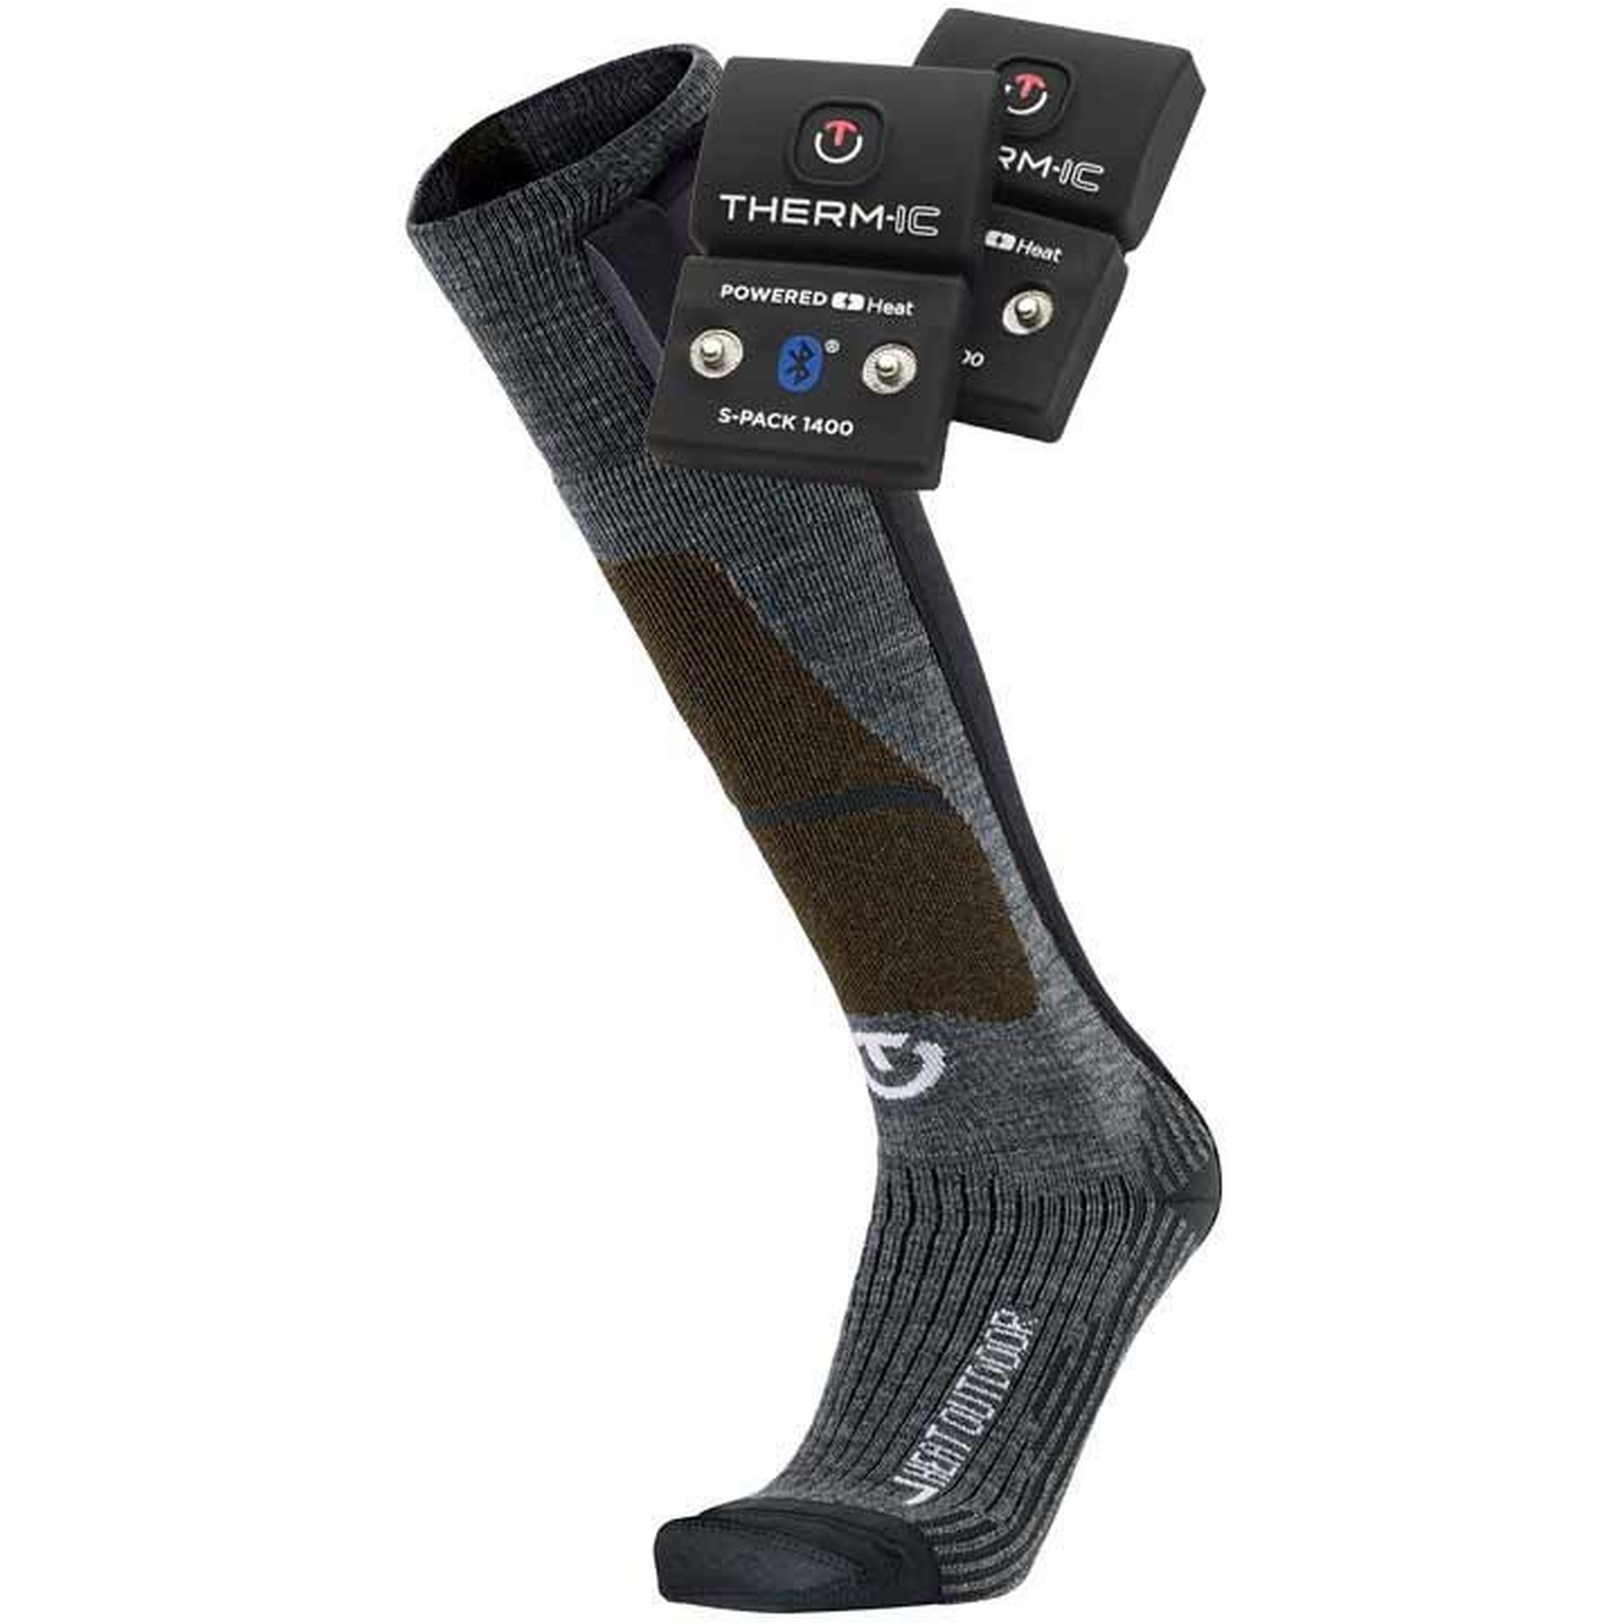 Productfoto van therm-ic Powersock Set - Heat Fusion Outdoor Heatable Socks + S-Pack 1400 B Battery - grey